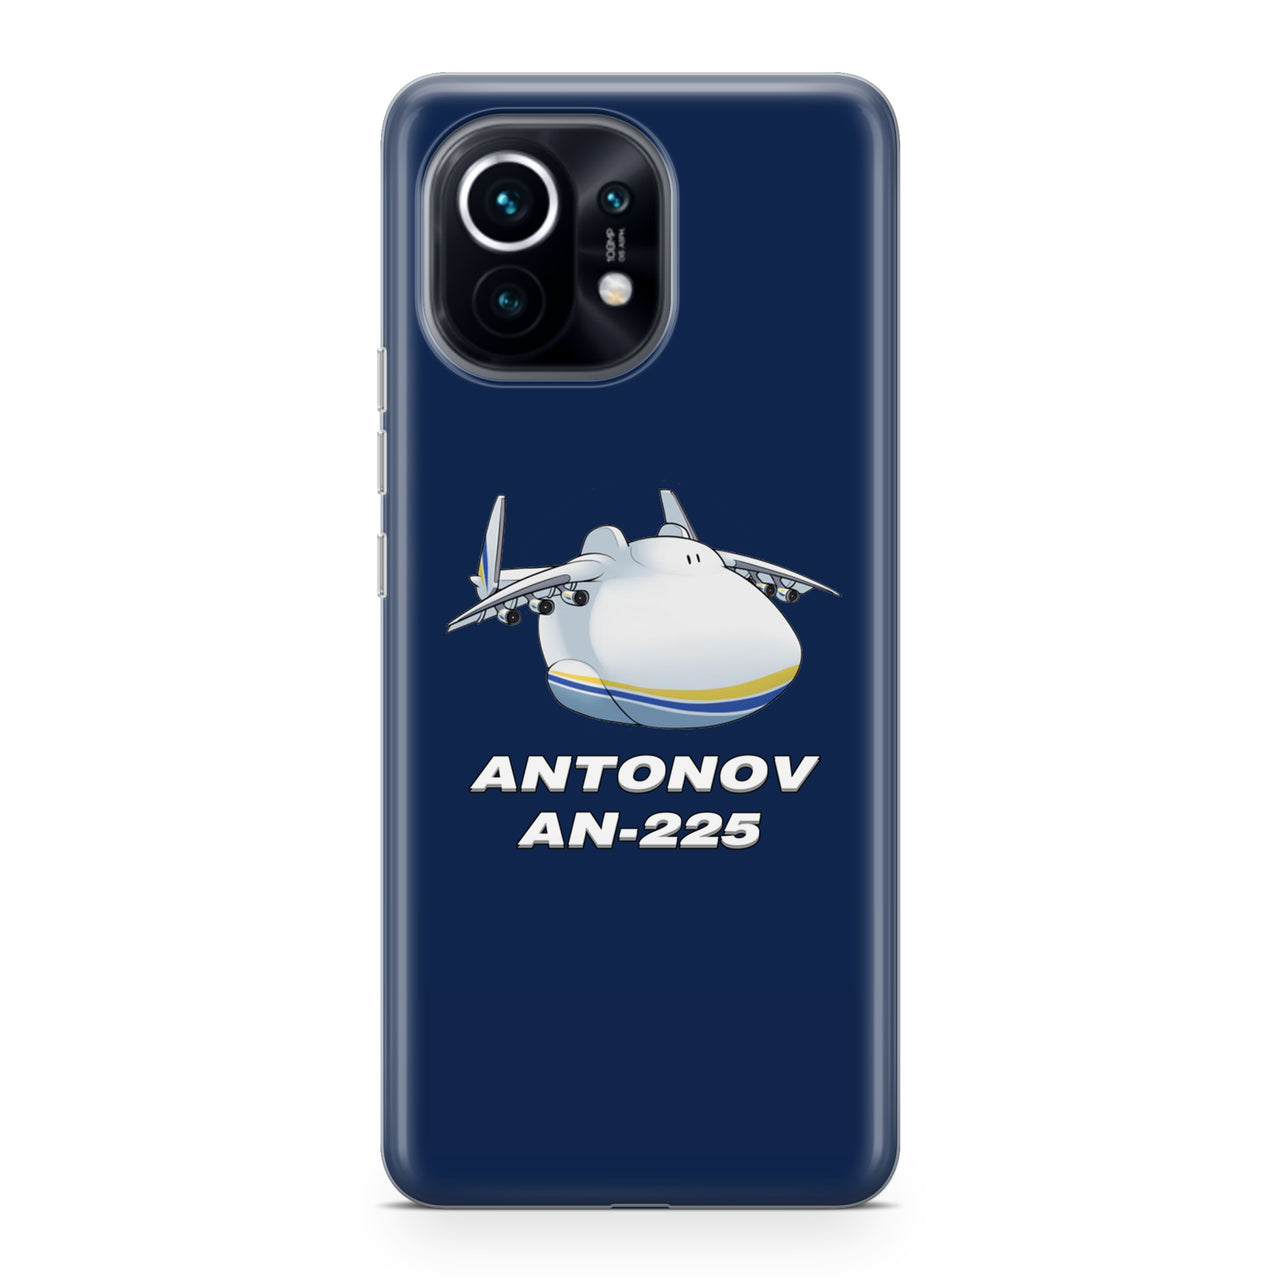 Antonov AN-225 (21) Designed Xiaomi Cases